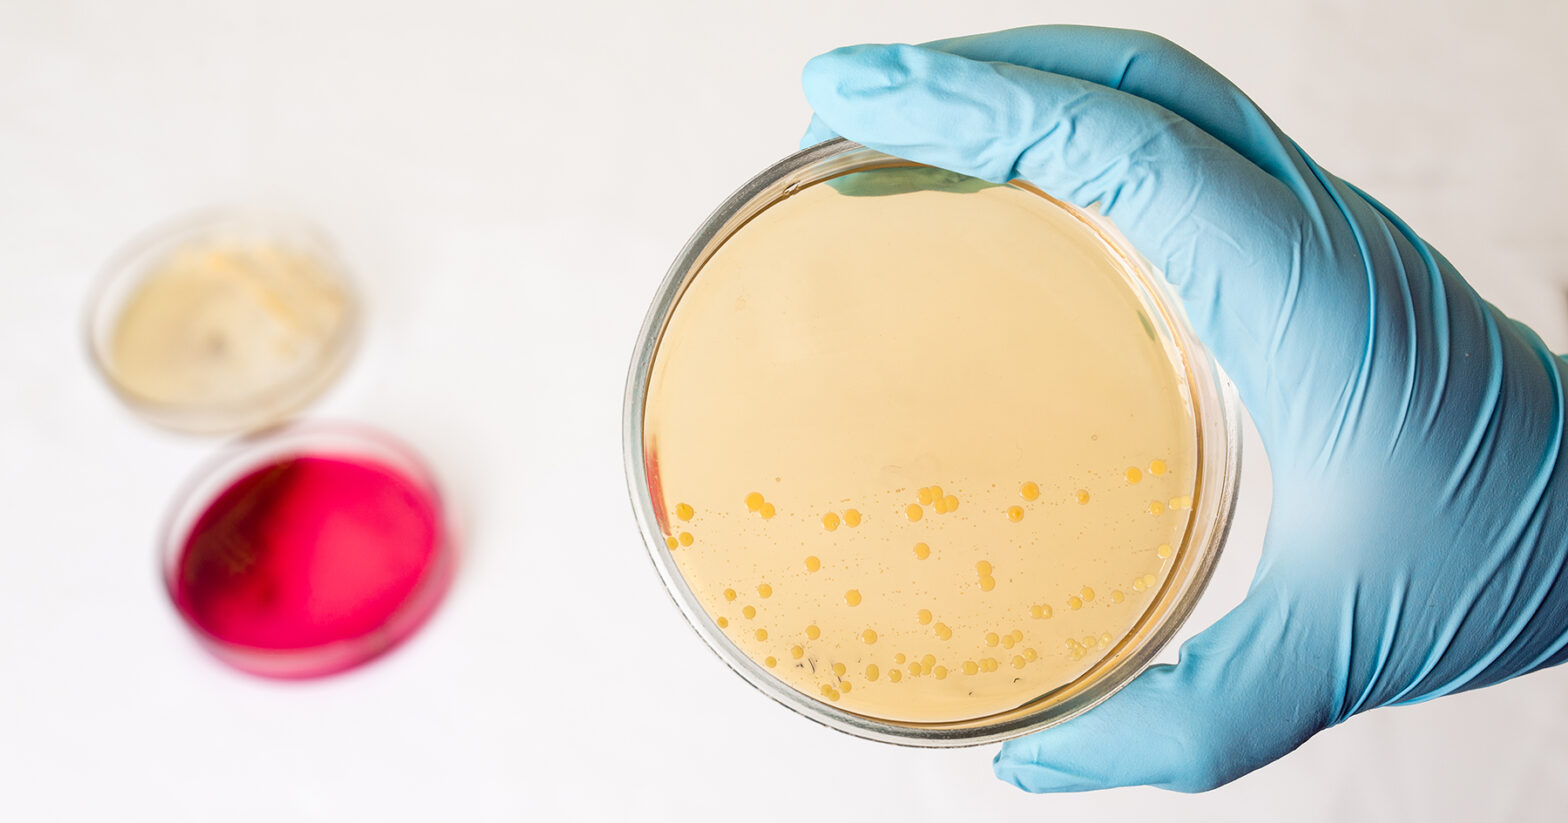 Global Staphylococcus Aureus Testing Industry